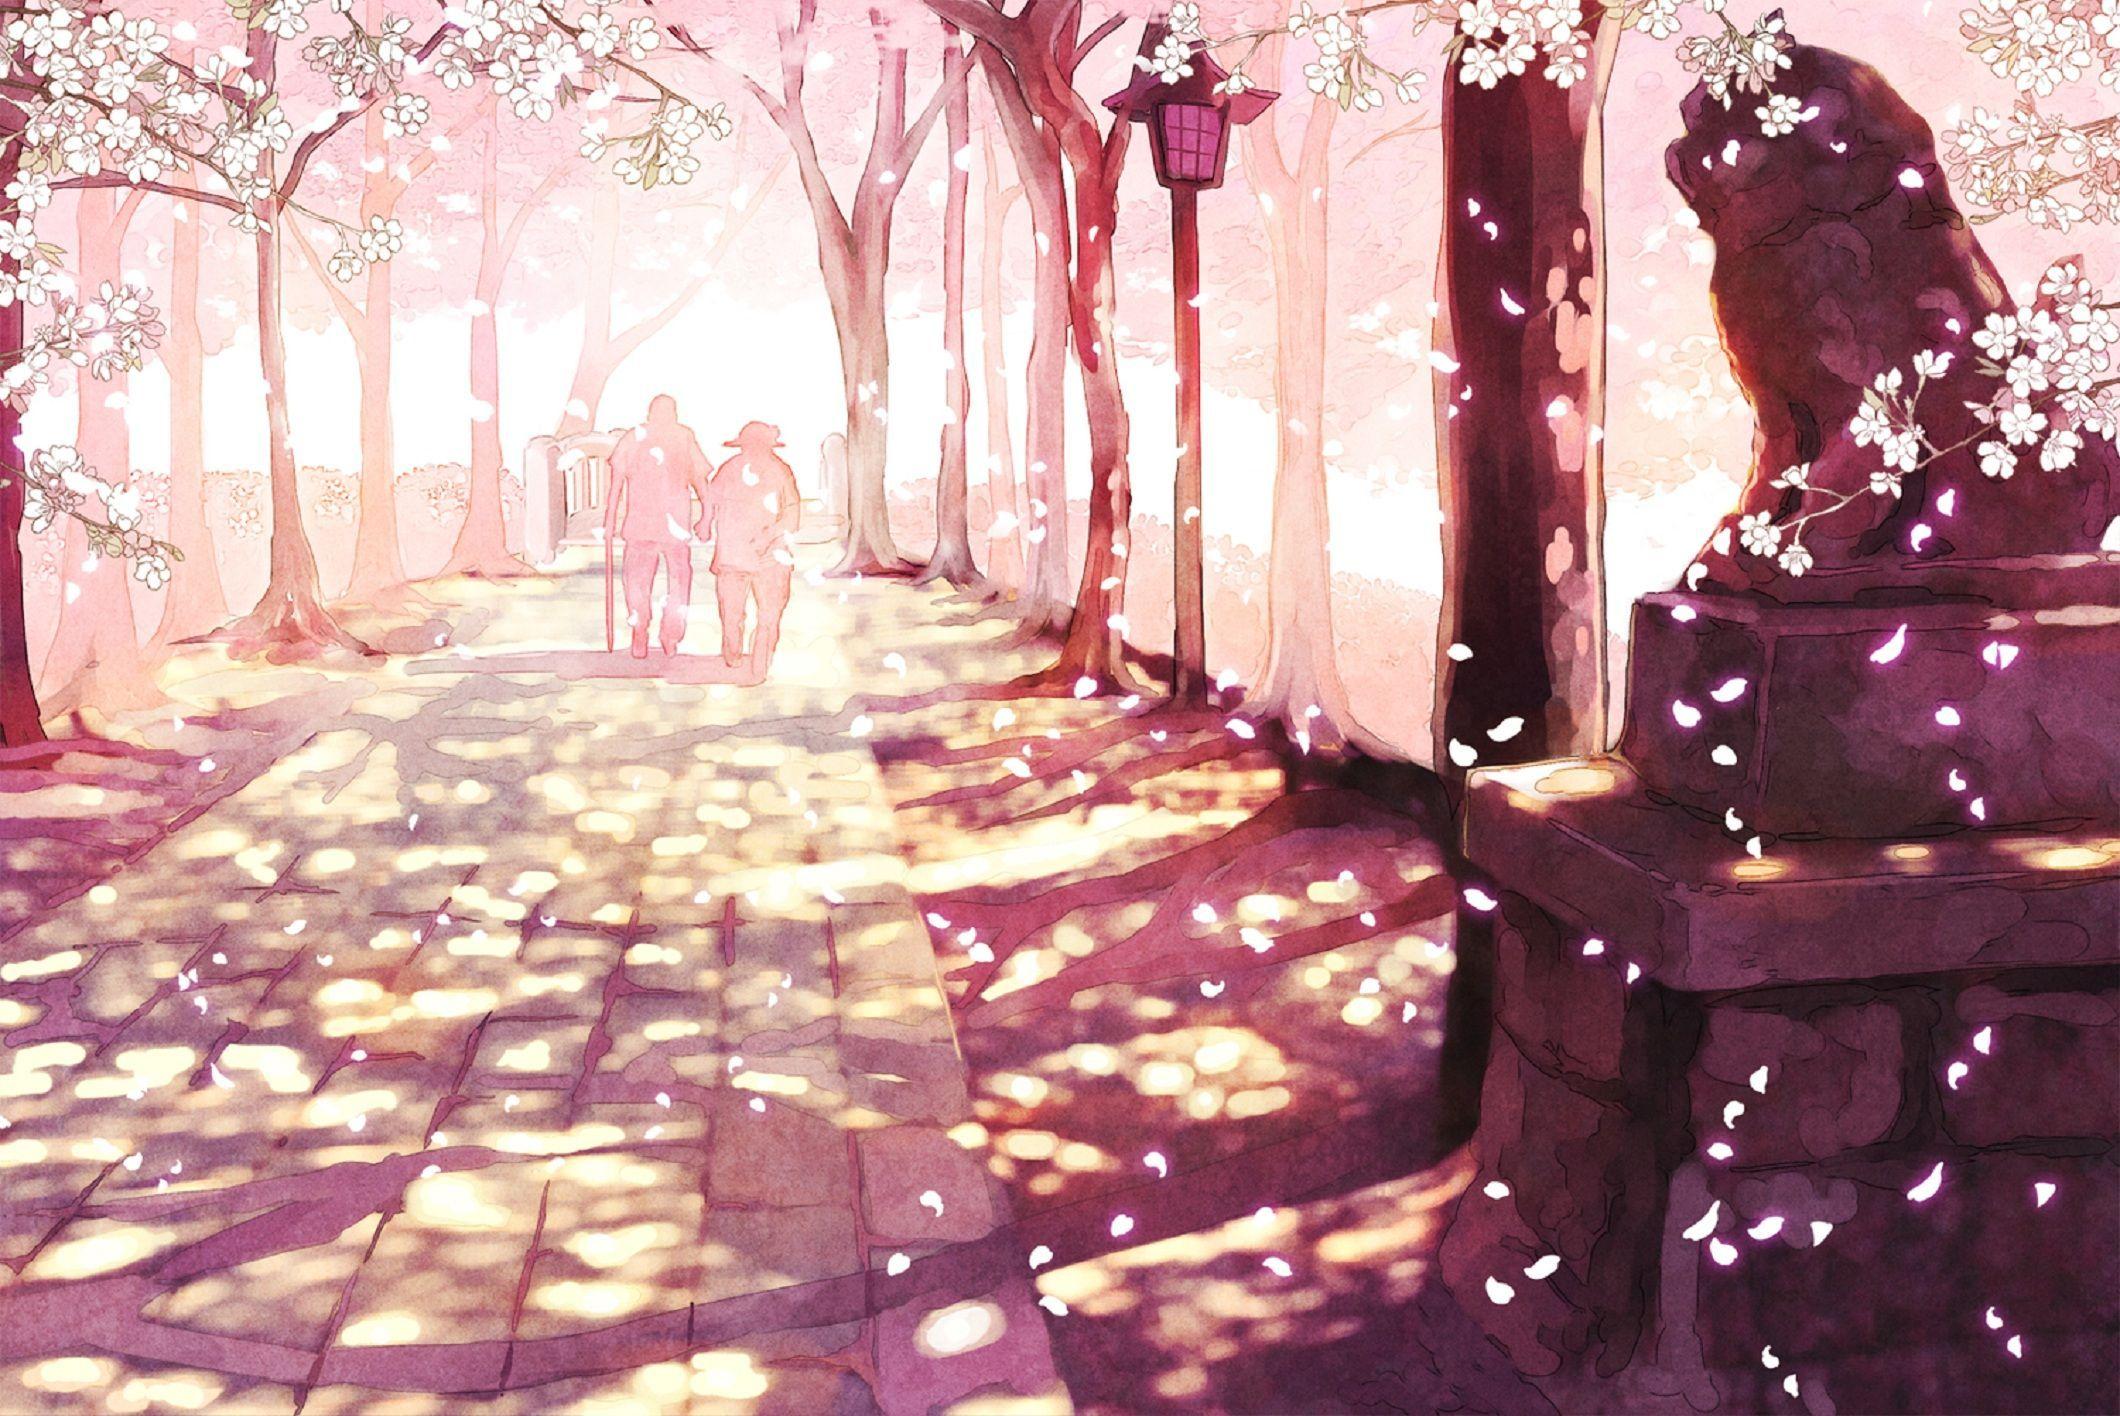 Pink Anime Desktop Wallpapers - Wallpaper Cave